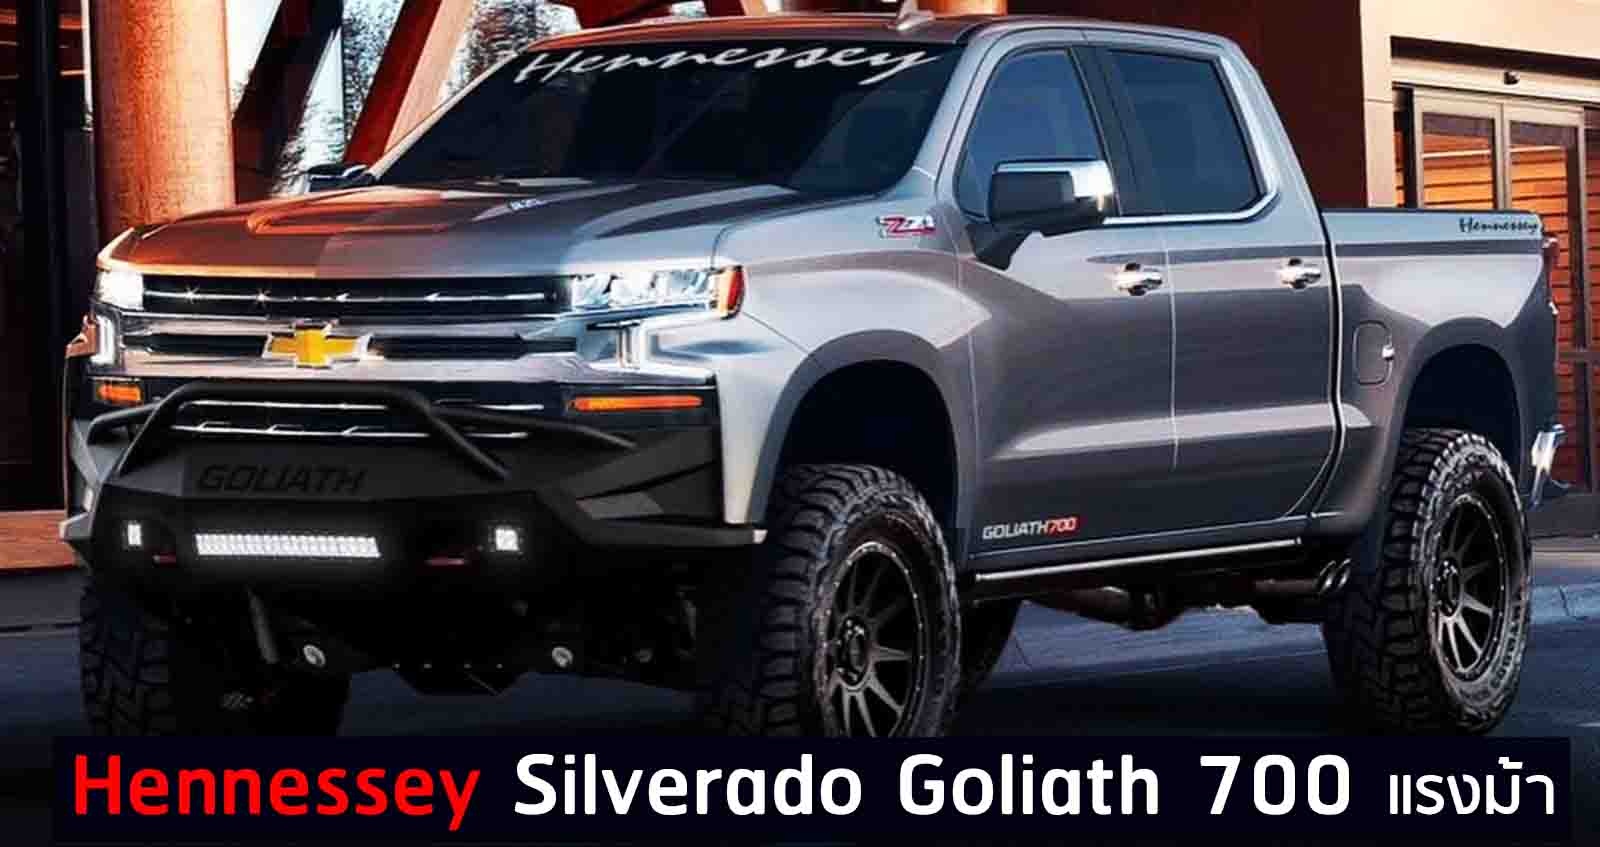 Chevrolet Silverado Goliath 700 แรงม้า แต่งโดย Hennessey ราคา 11.8 ล้านบาท